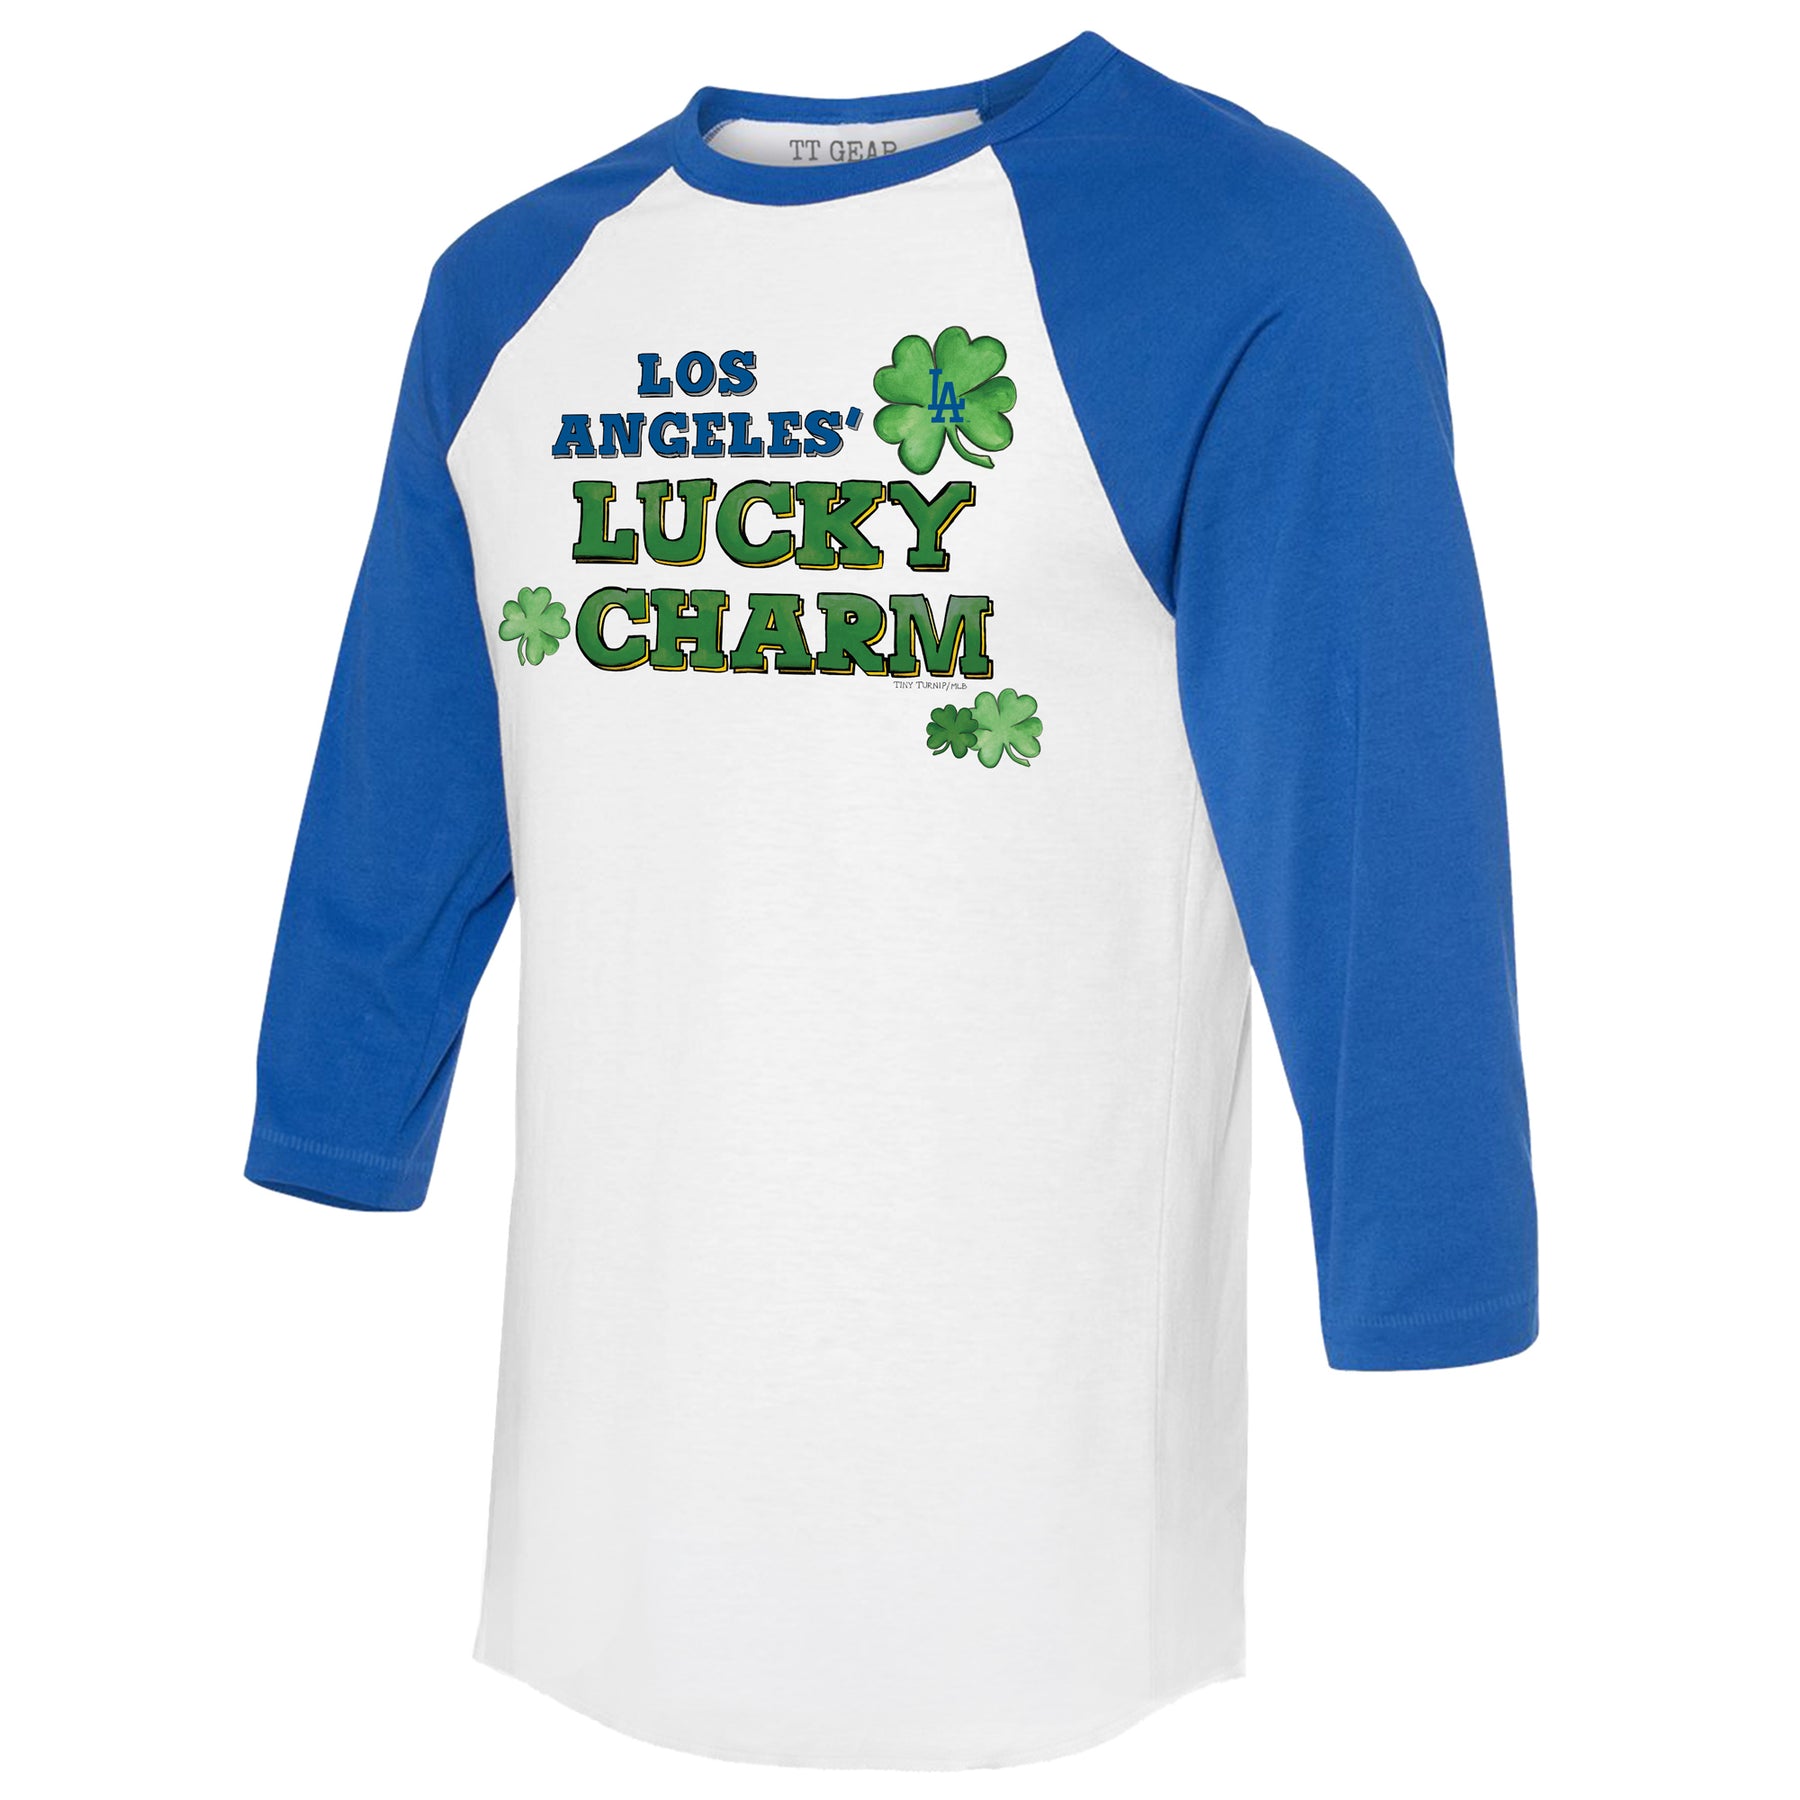 Los Angeles Dodgers Lucky Charm 3/4 Royal Blue Sleeve Raglan Unisex XL